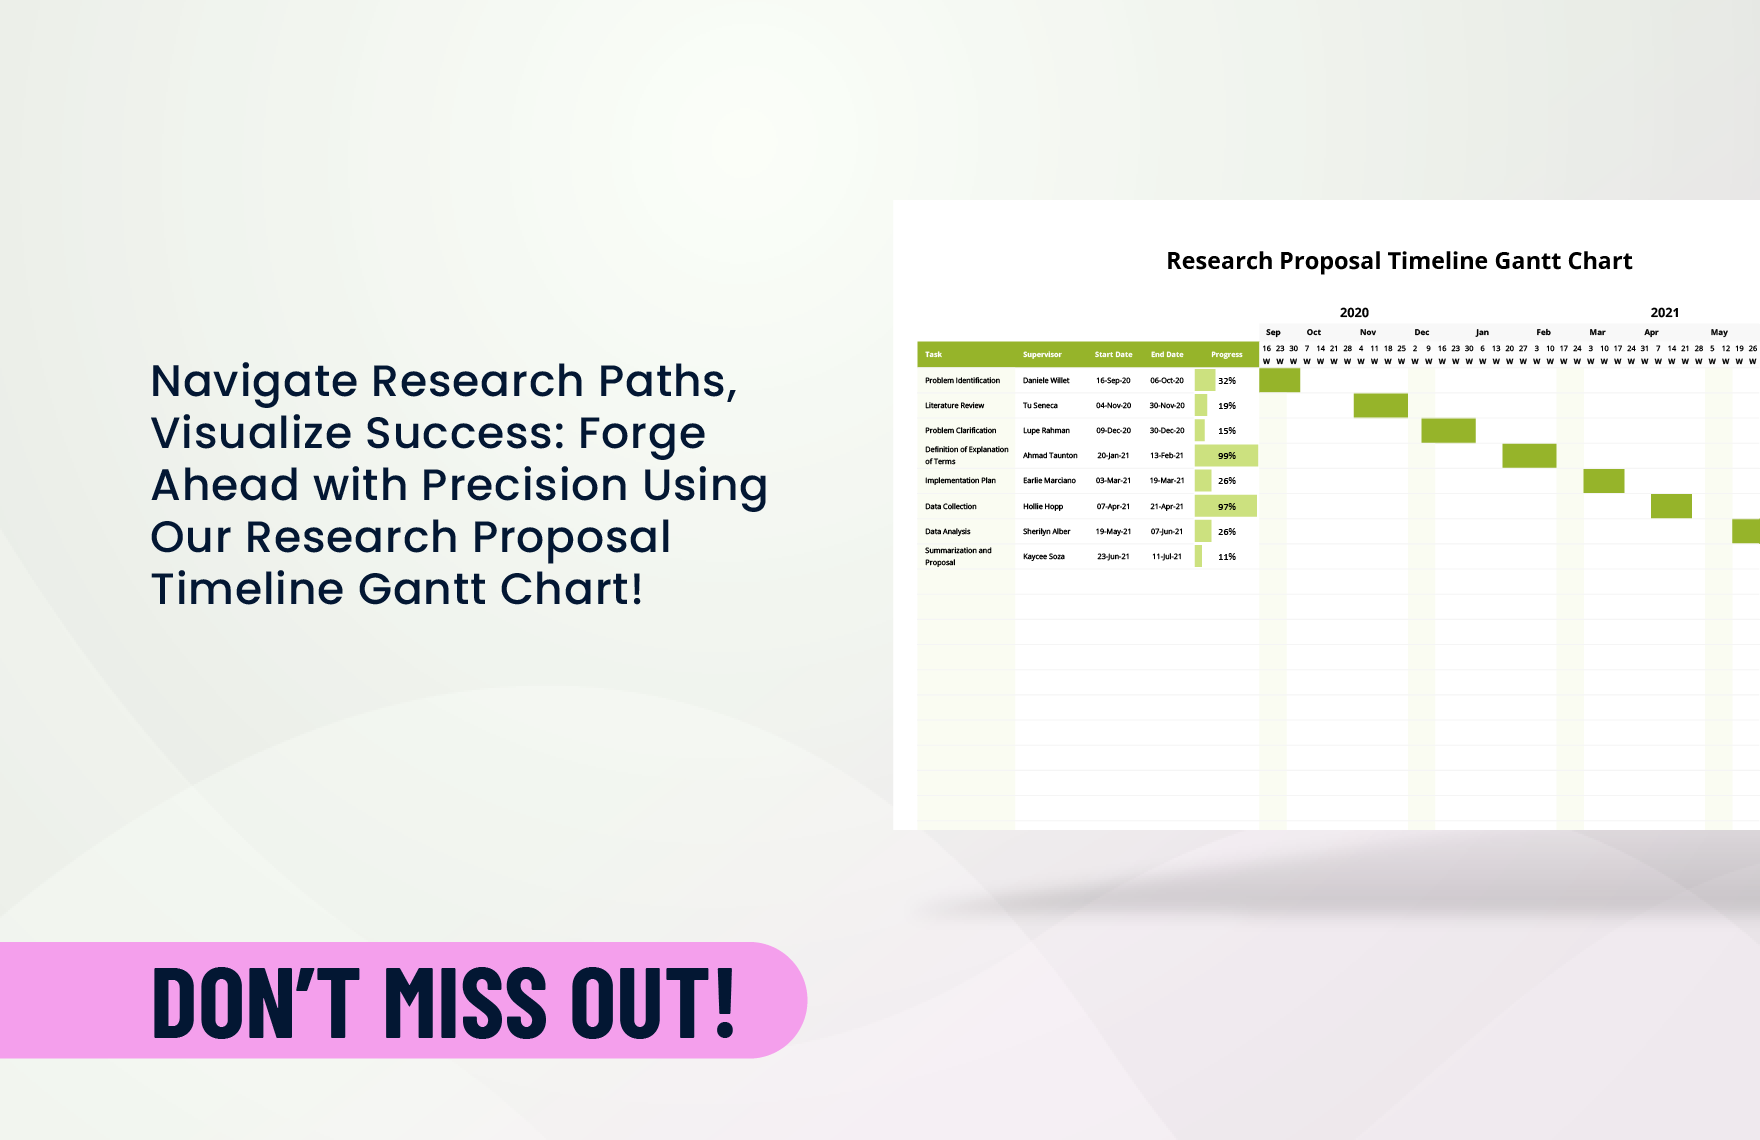 Research Proposal Timeline Gantt Chart Template